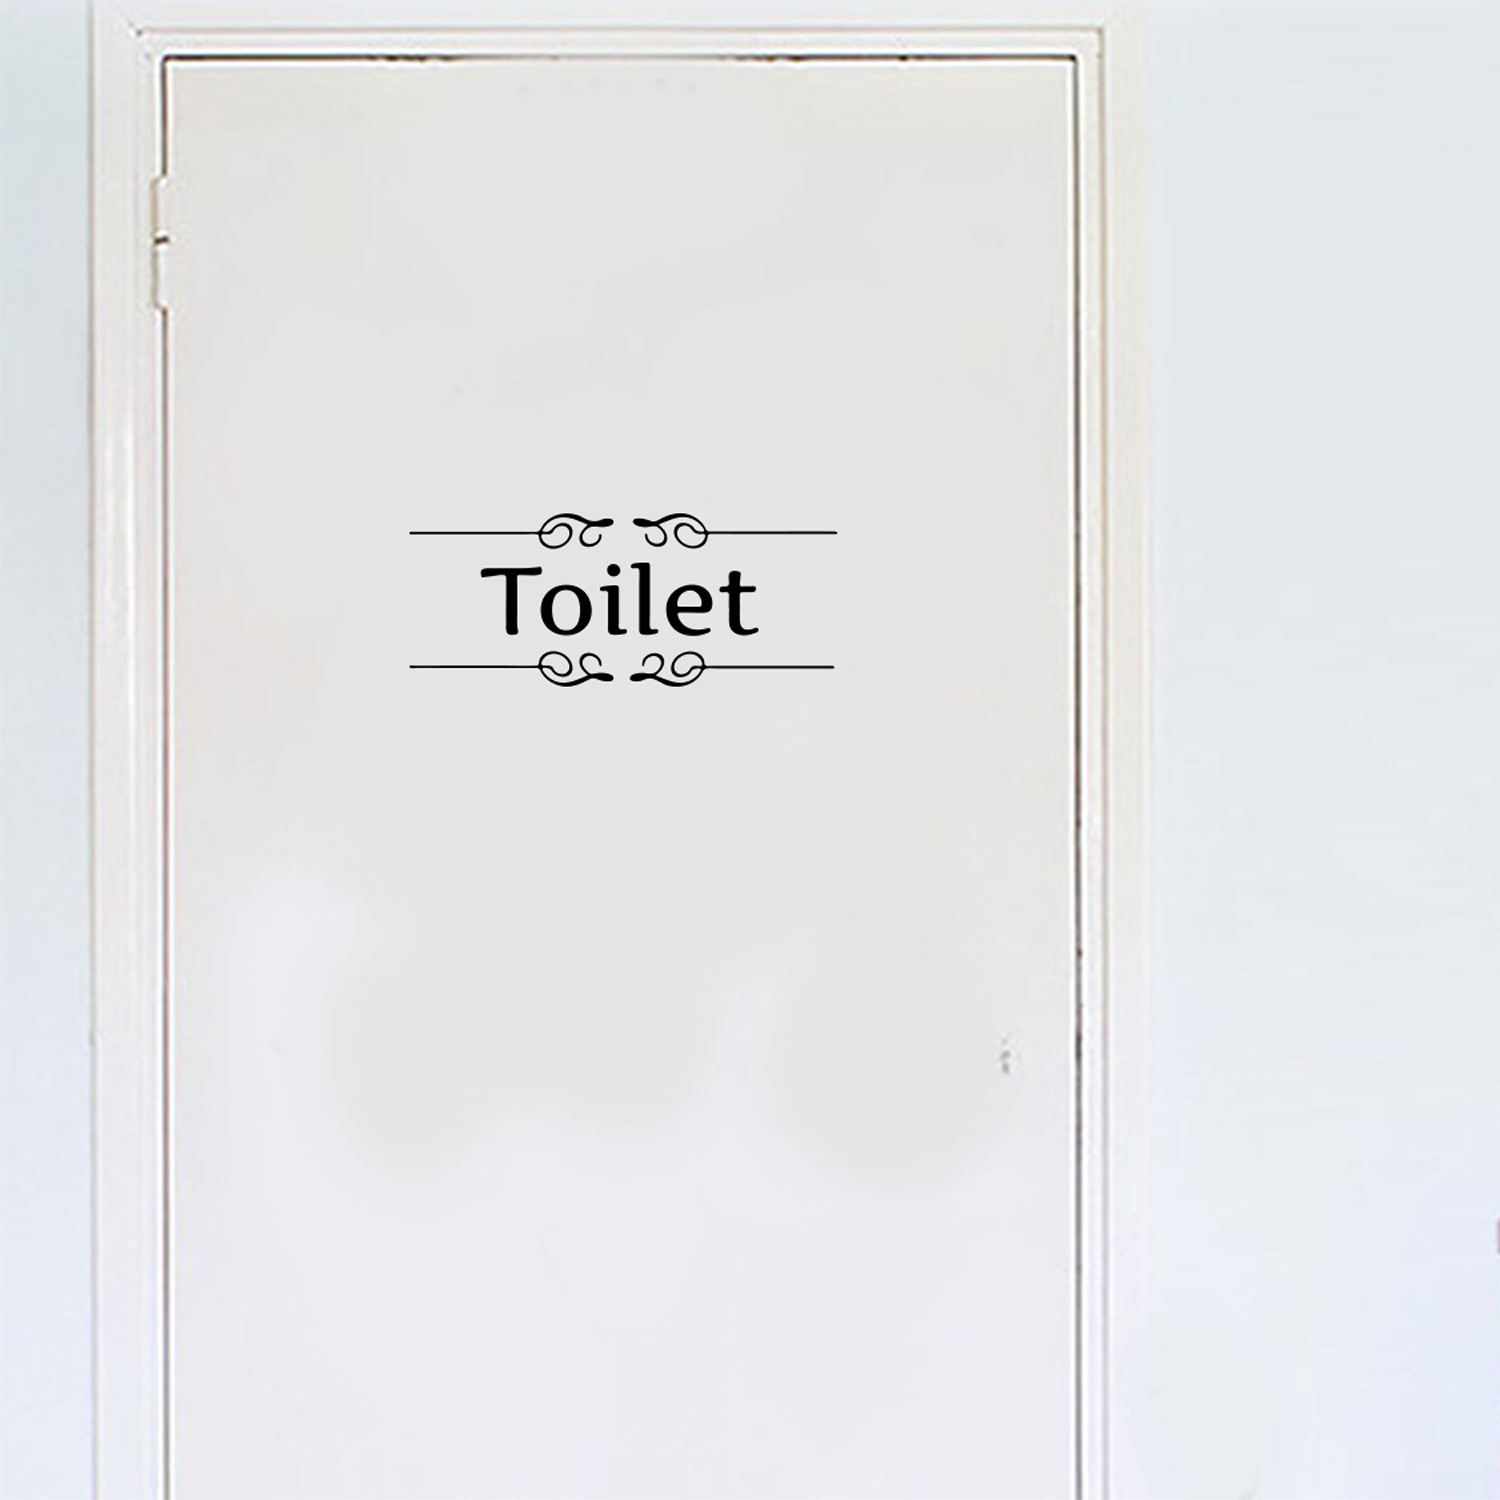 Toilet Bathroom厕所浴室洗衣房家庭英文标识跨境可移除贴纸A7263